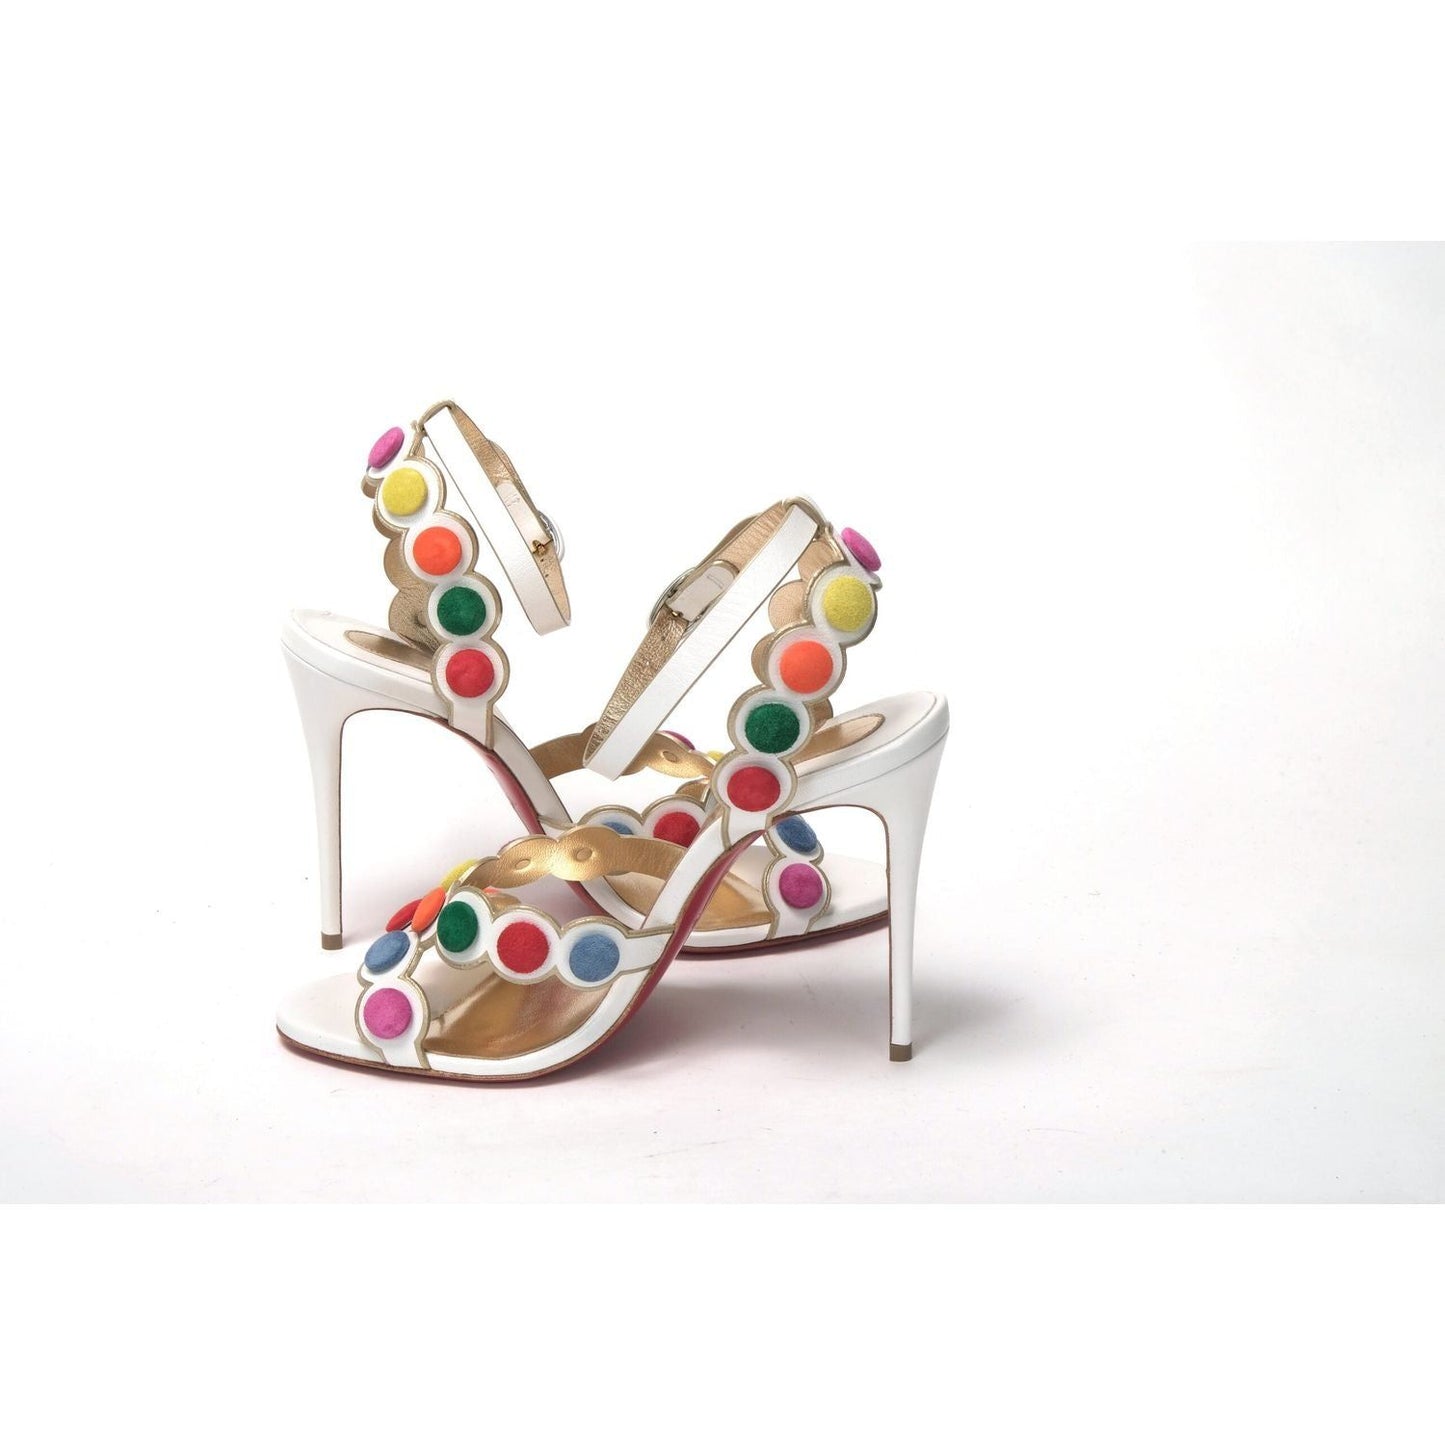 Christian Louboutin White Multicolor Spot Design High Heels Shoes Sandal white-multicolor-spot-design-high-heels-shoes-sandal CL027-SMARTISSIMA-100-KID-IRISE-LINING-VERS-MULTI_LIN-MEKONGWHITE-AND-MULTI-8-DETAIL-scaled-e01255a4-c51.jpg